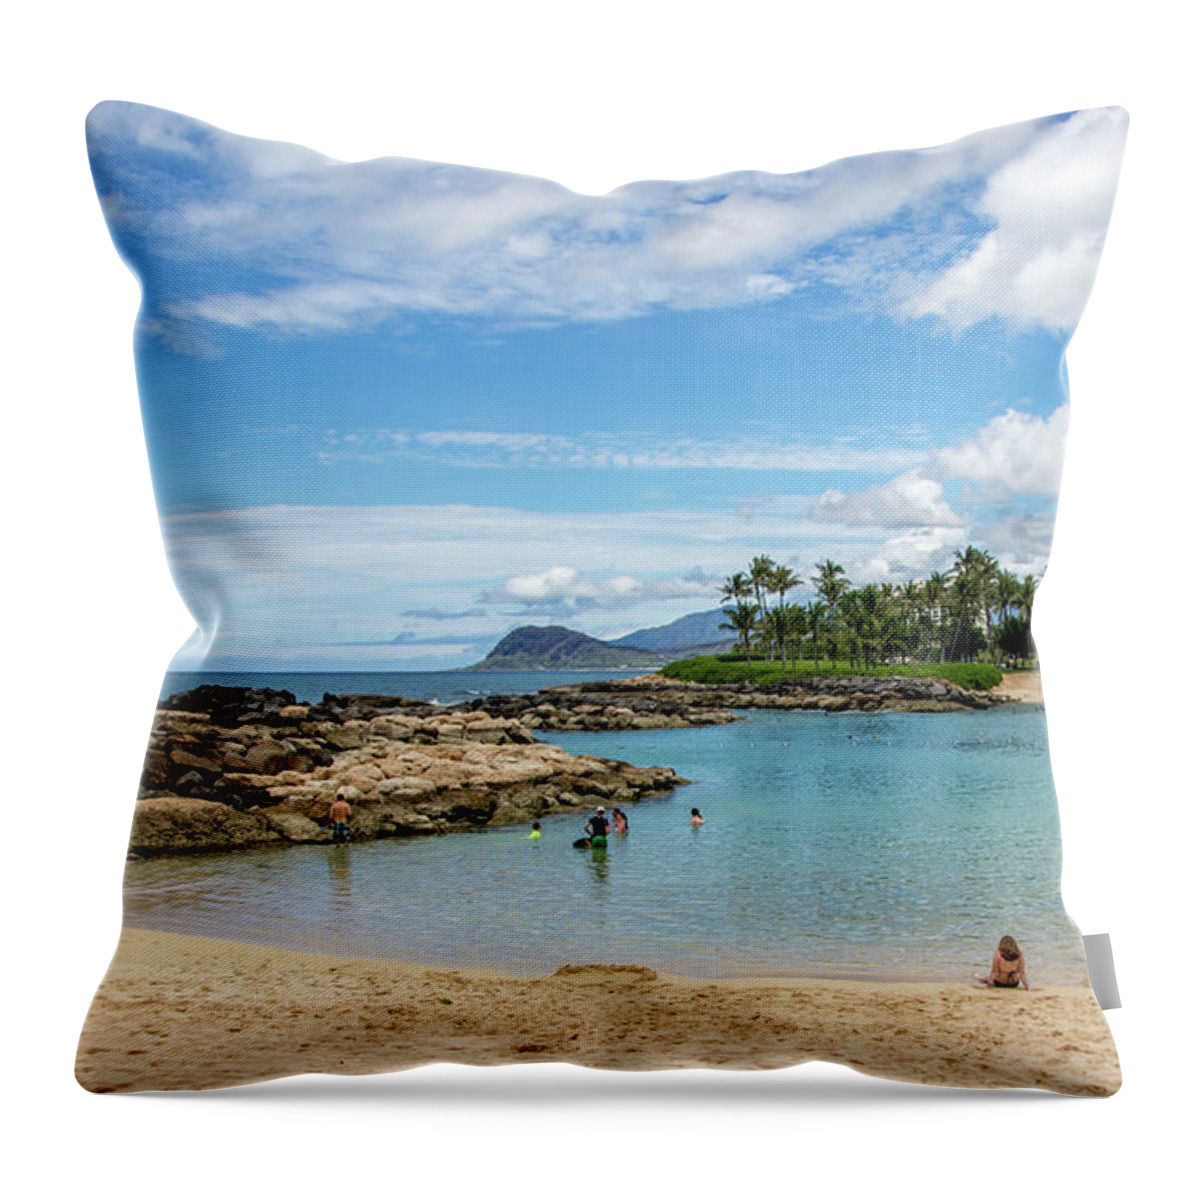 Man Made Disney Aluani Oahu Ocean Throw Pillow featuring the photograph Lagoon by Shawn MacMeekin